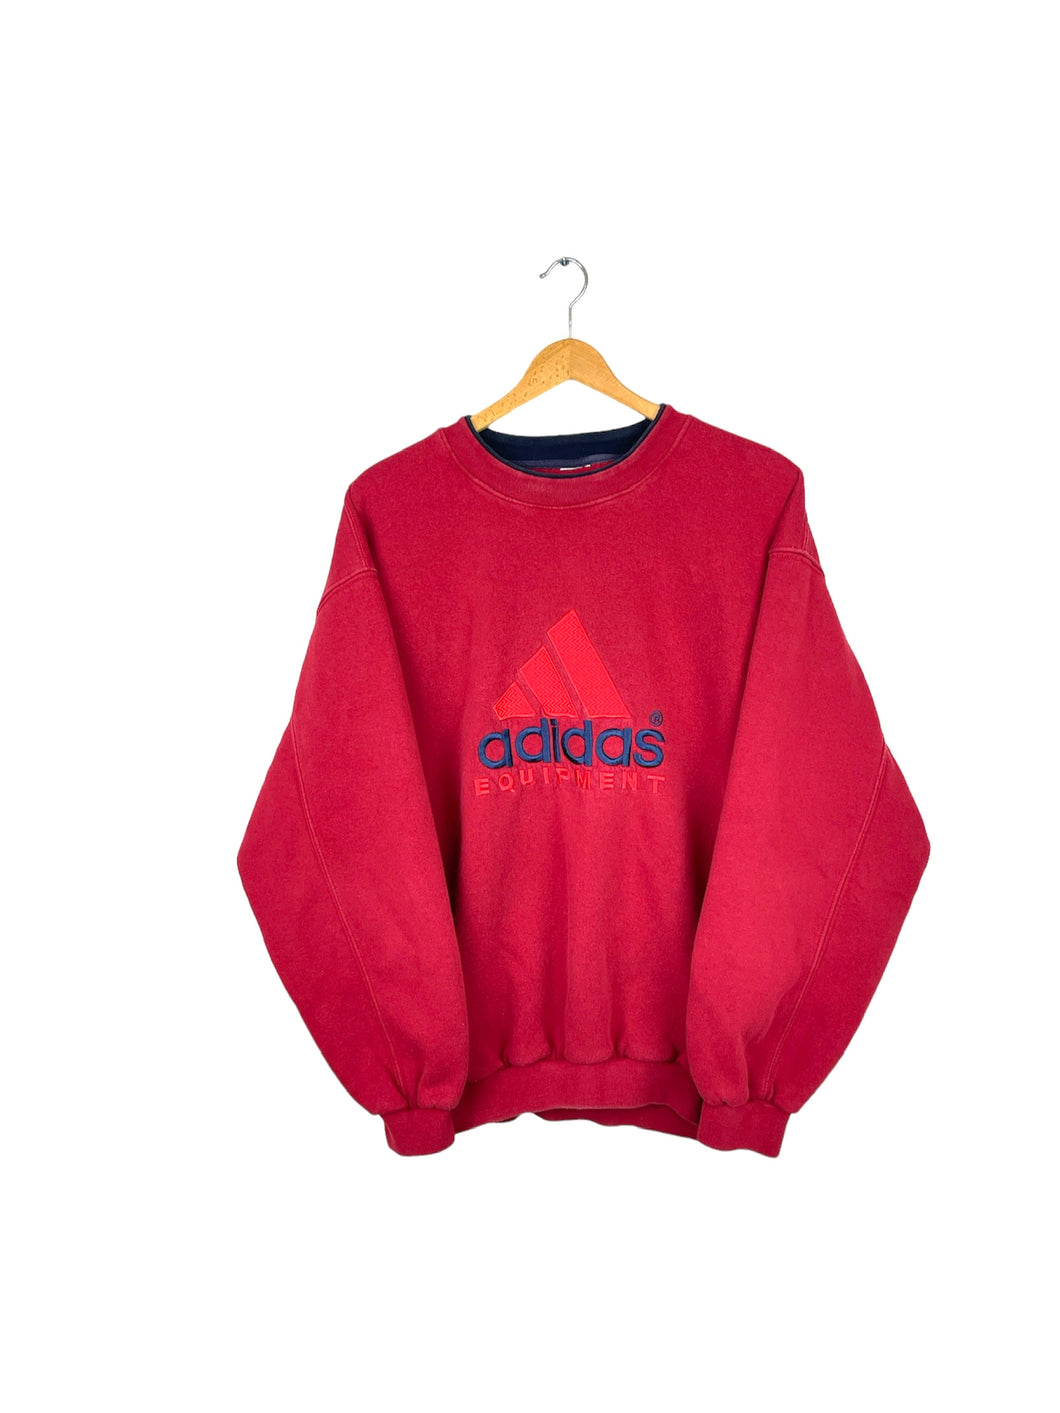 Adidas Equipment Sweatshirt - XLarge